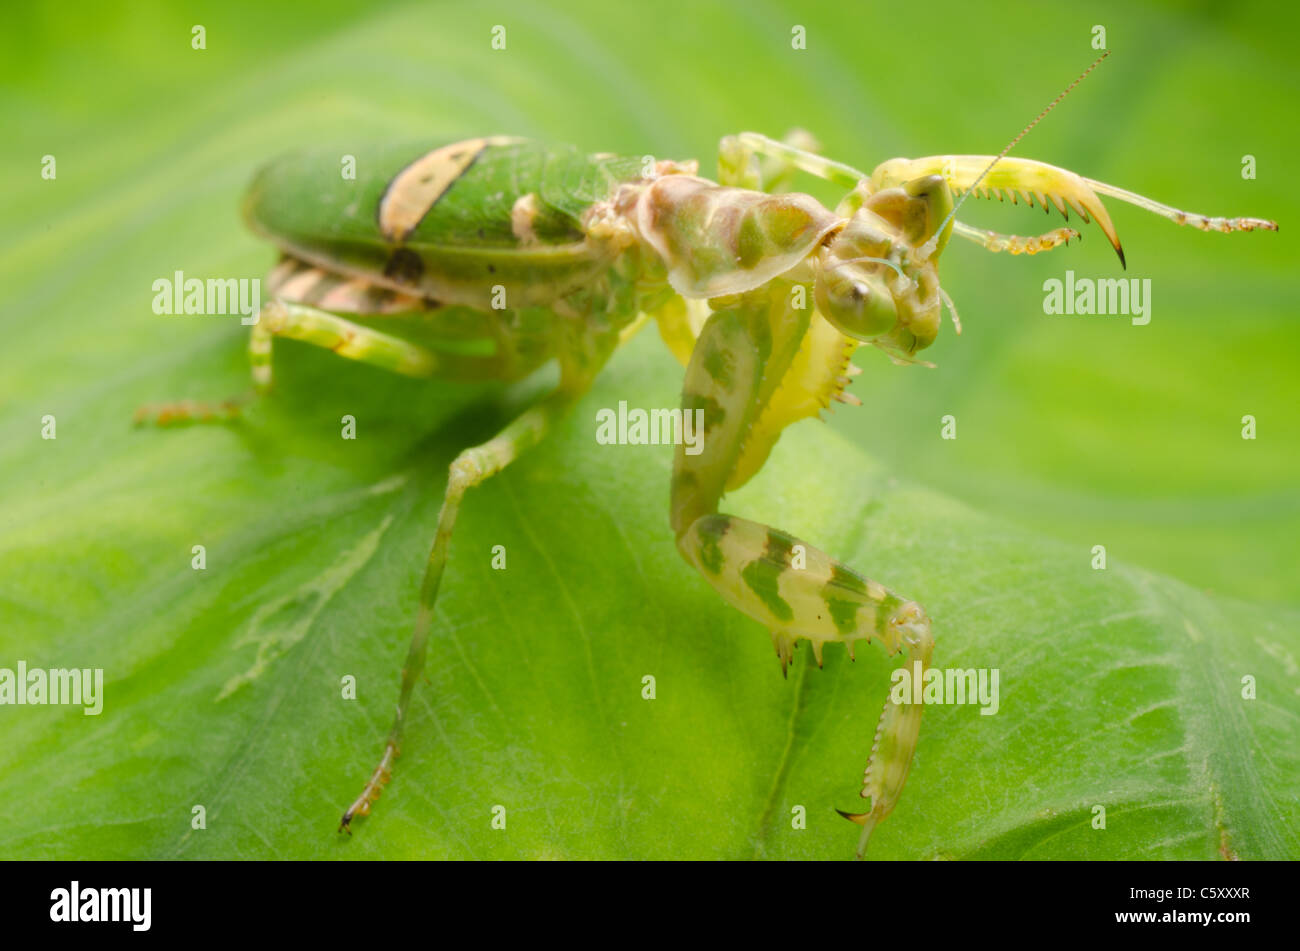 green flower praying mantis on leaf Stock Photo